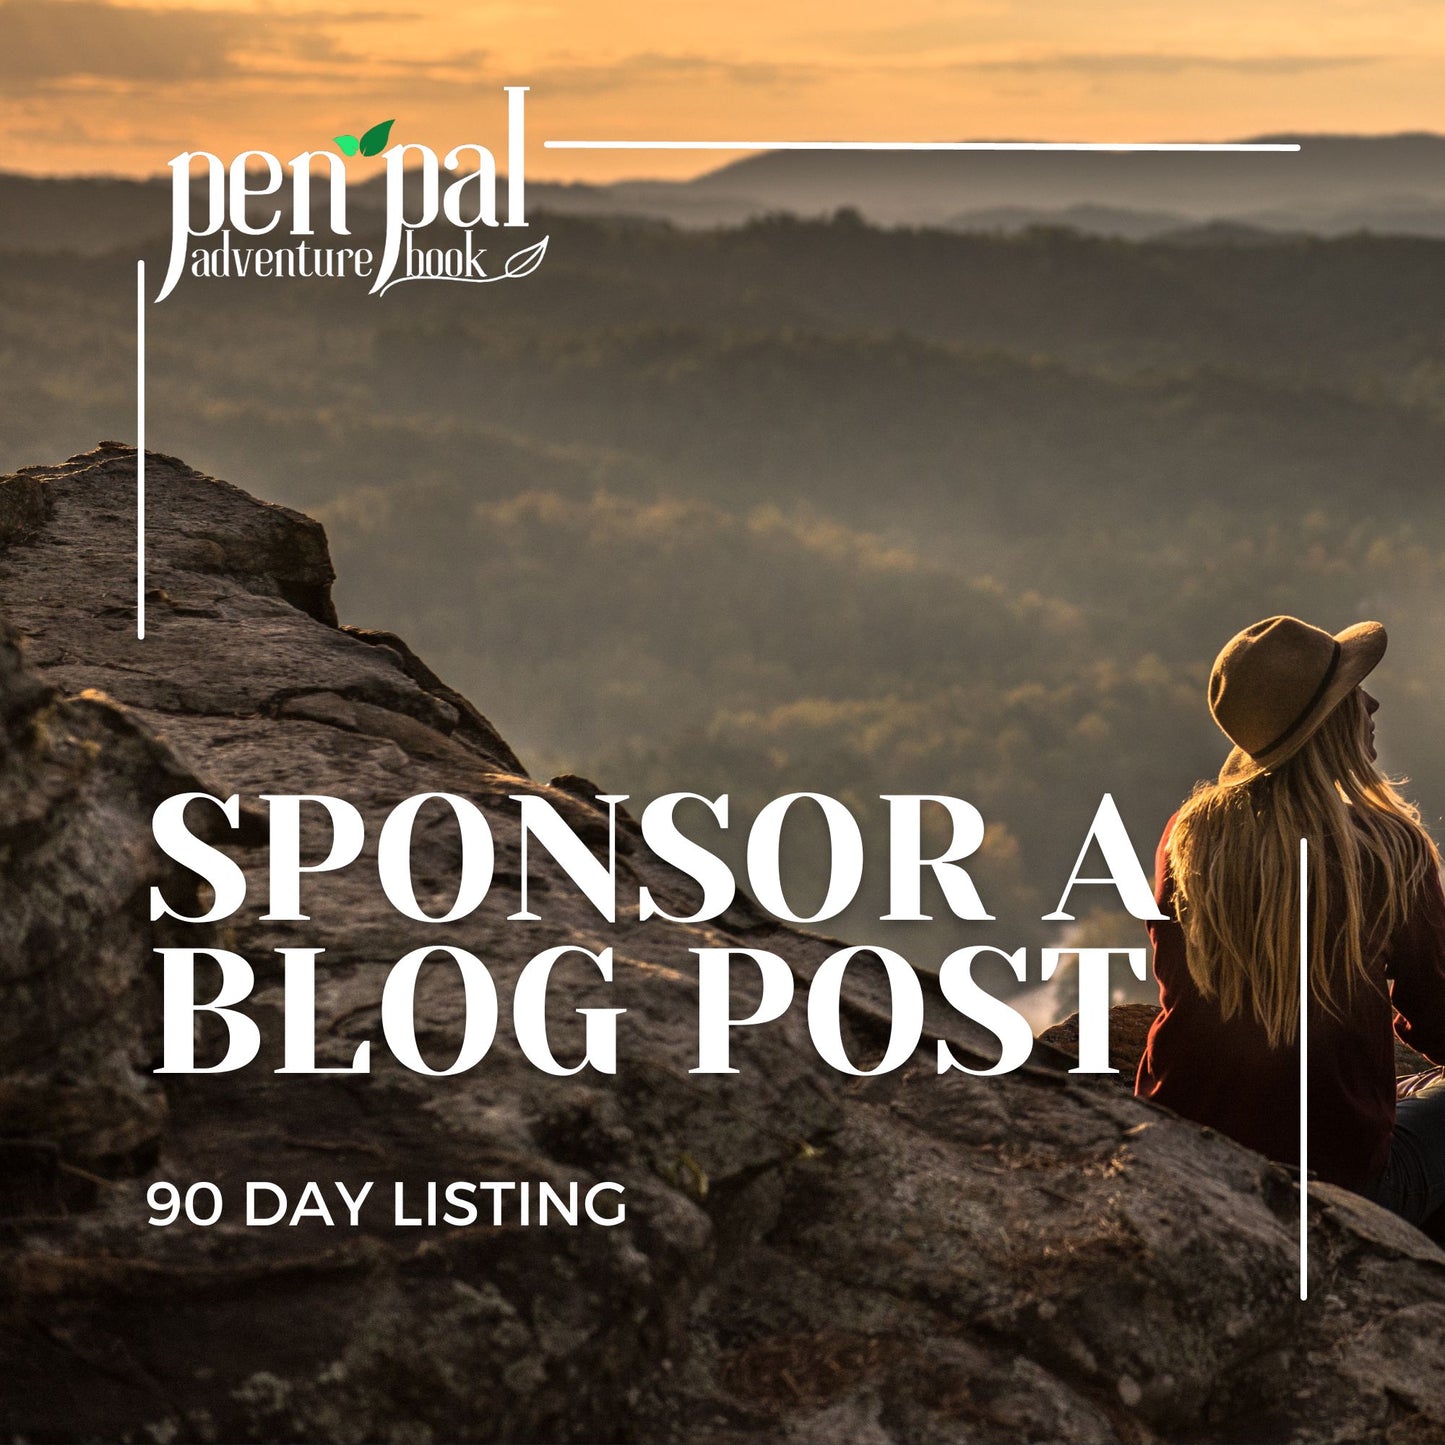 Advertising - Sponsor a Blog Post for 90 Days on the Pen Pal Adventure Blog